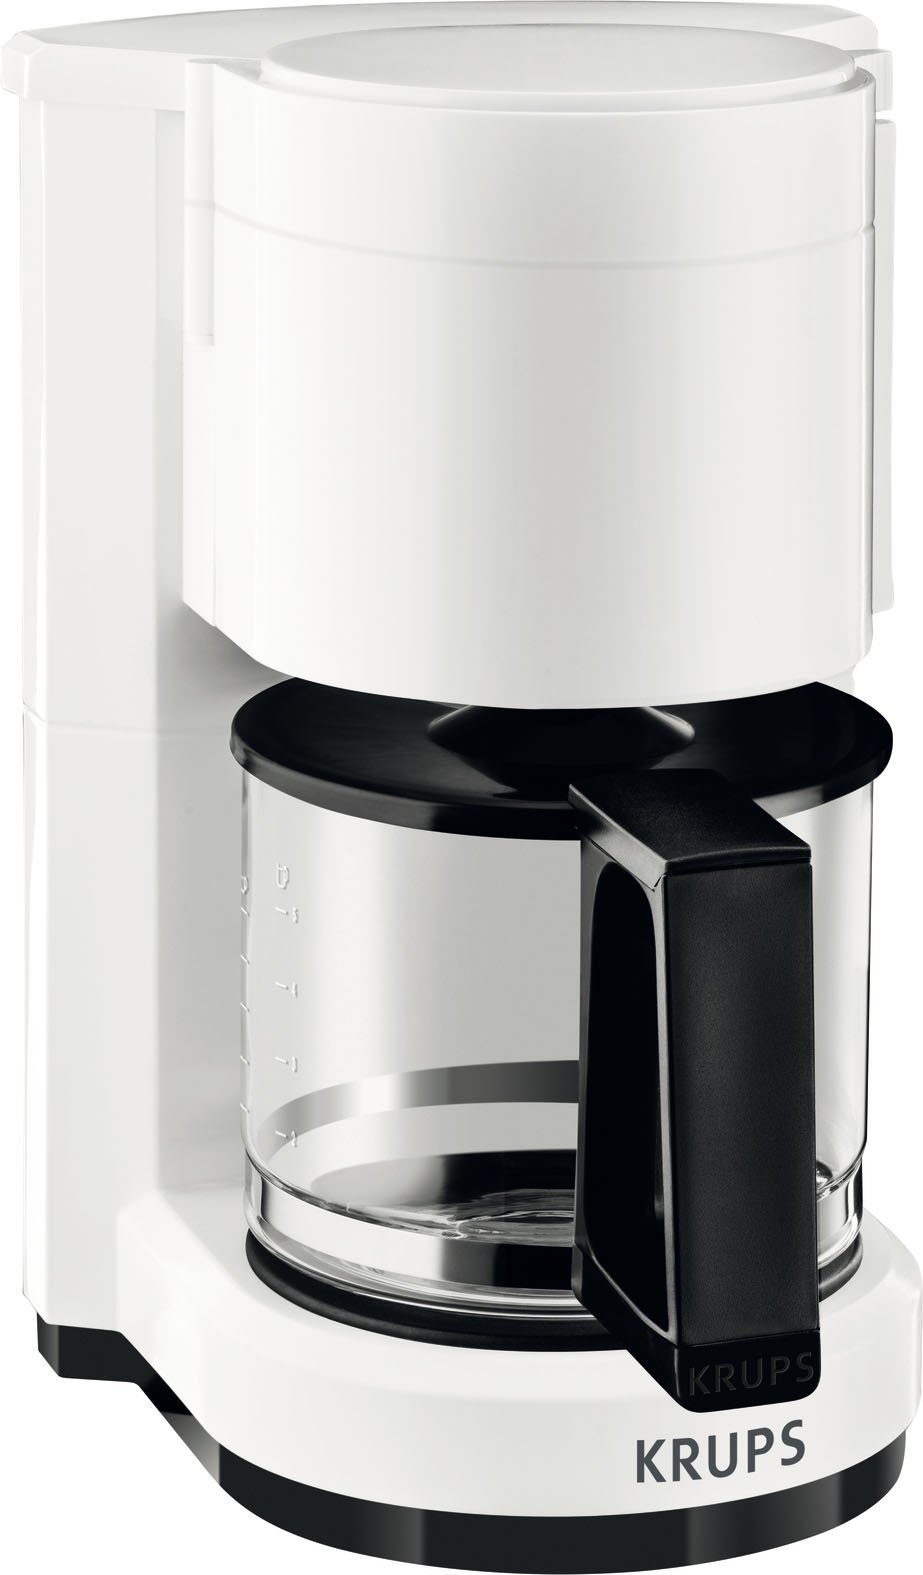 Krups Filterkaffeemaschine F18301 Aromacafe, 0,6l Kaffeekanne, für 5-7 Tassen Kaffee, herausnehmbarer Filterhalter, Warmhaltefunktion | Filterkaffeemaschinen